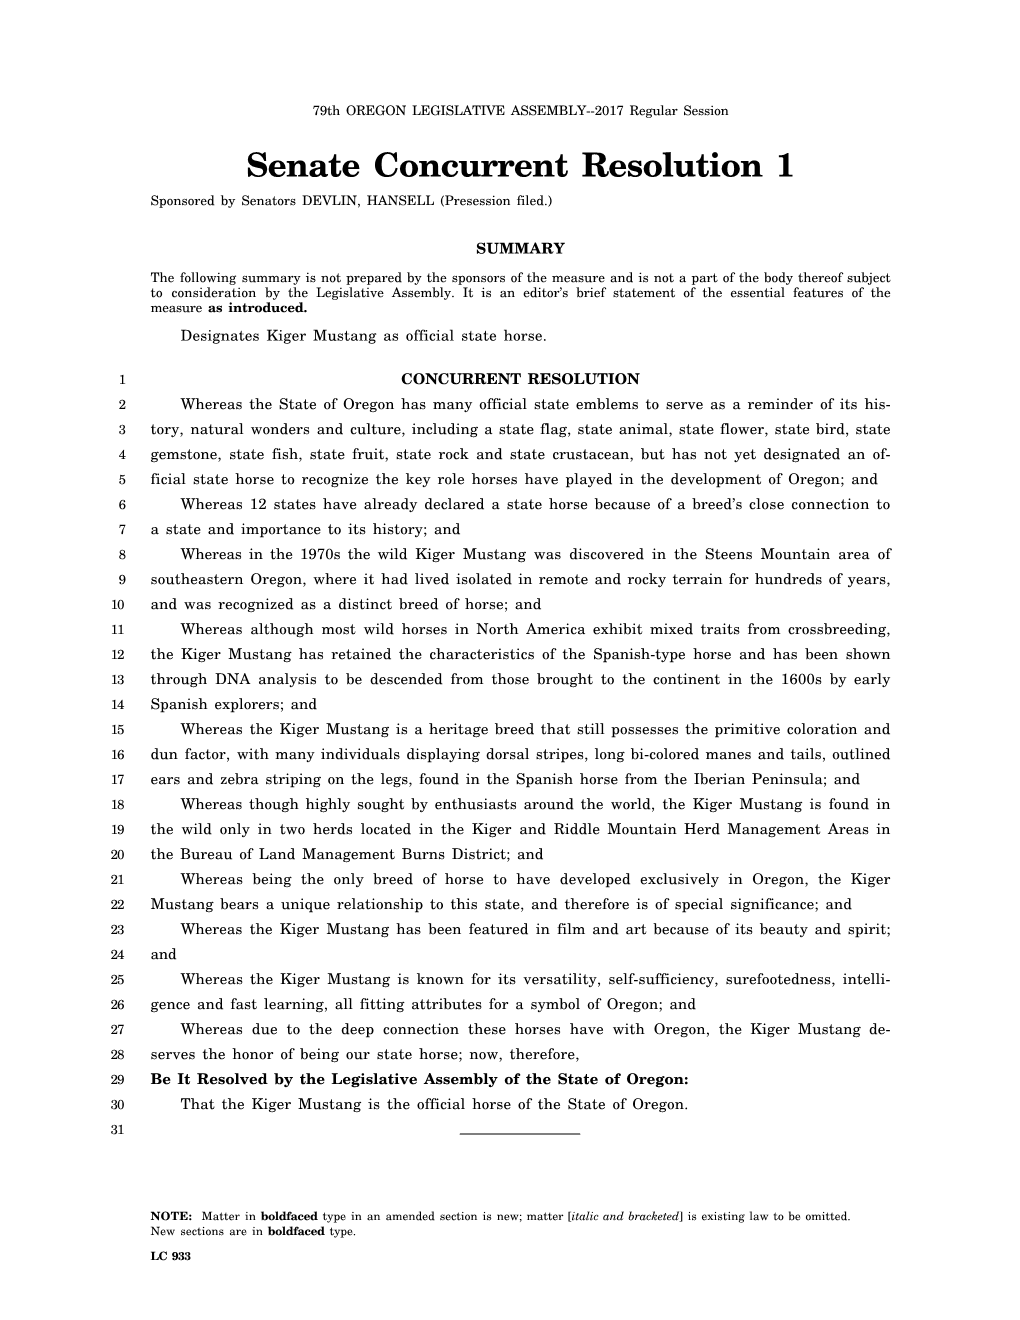 Senate Concurrent Resolution 1 Sponsored by Senators DEVLIN, HANSELL (Presession Filed.)